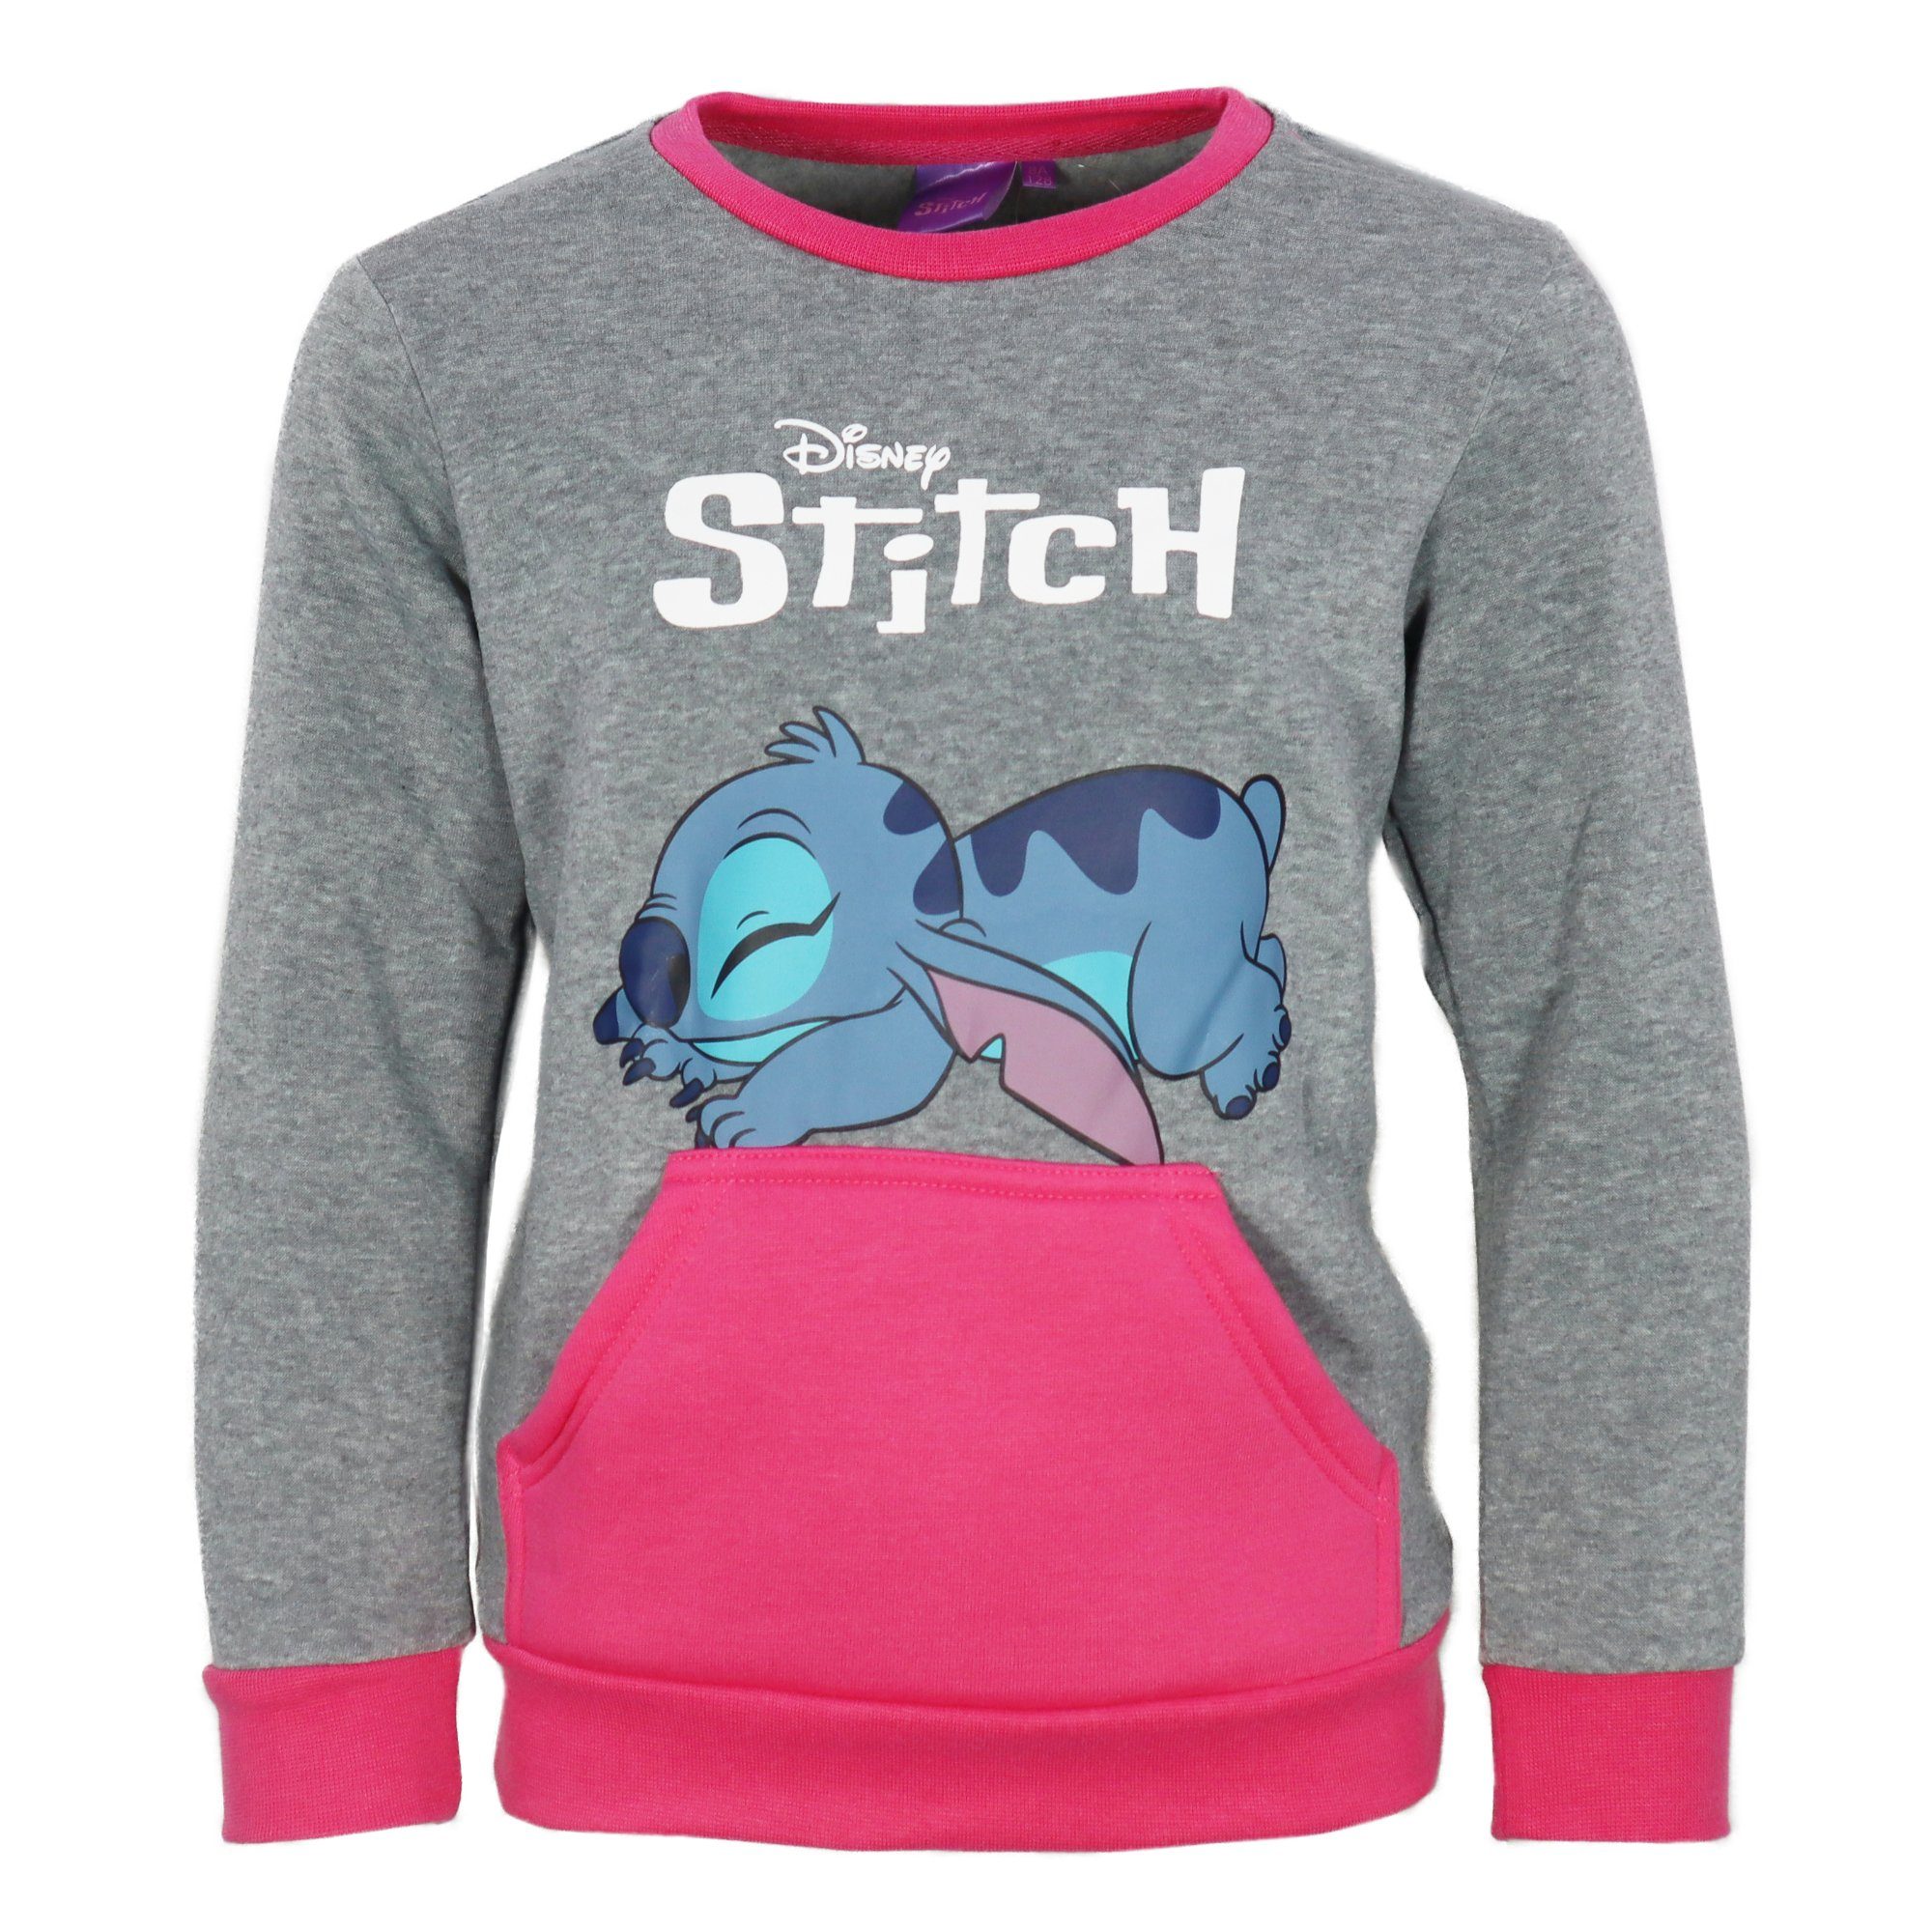 Fleece Grau Gr. Hose Sweater, 92 128 Jogginganzug Stitch Disney Disney Joggingset bis Kinder